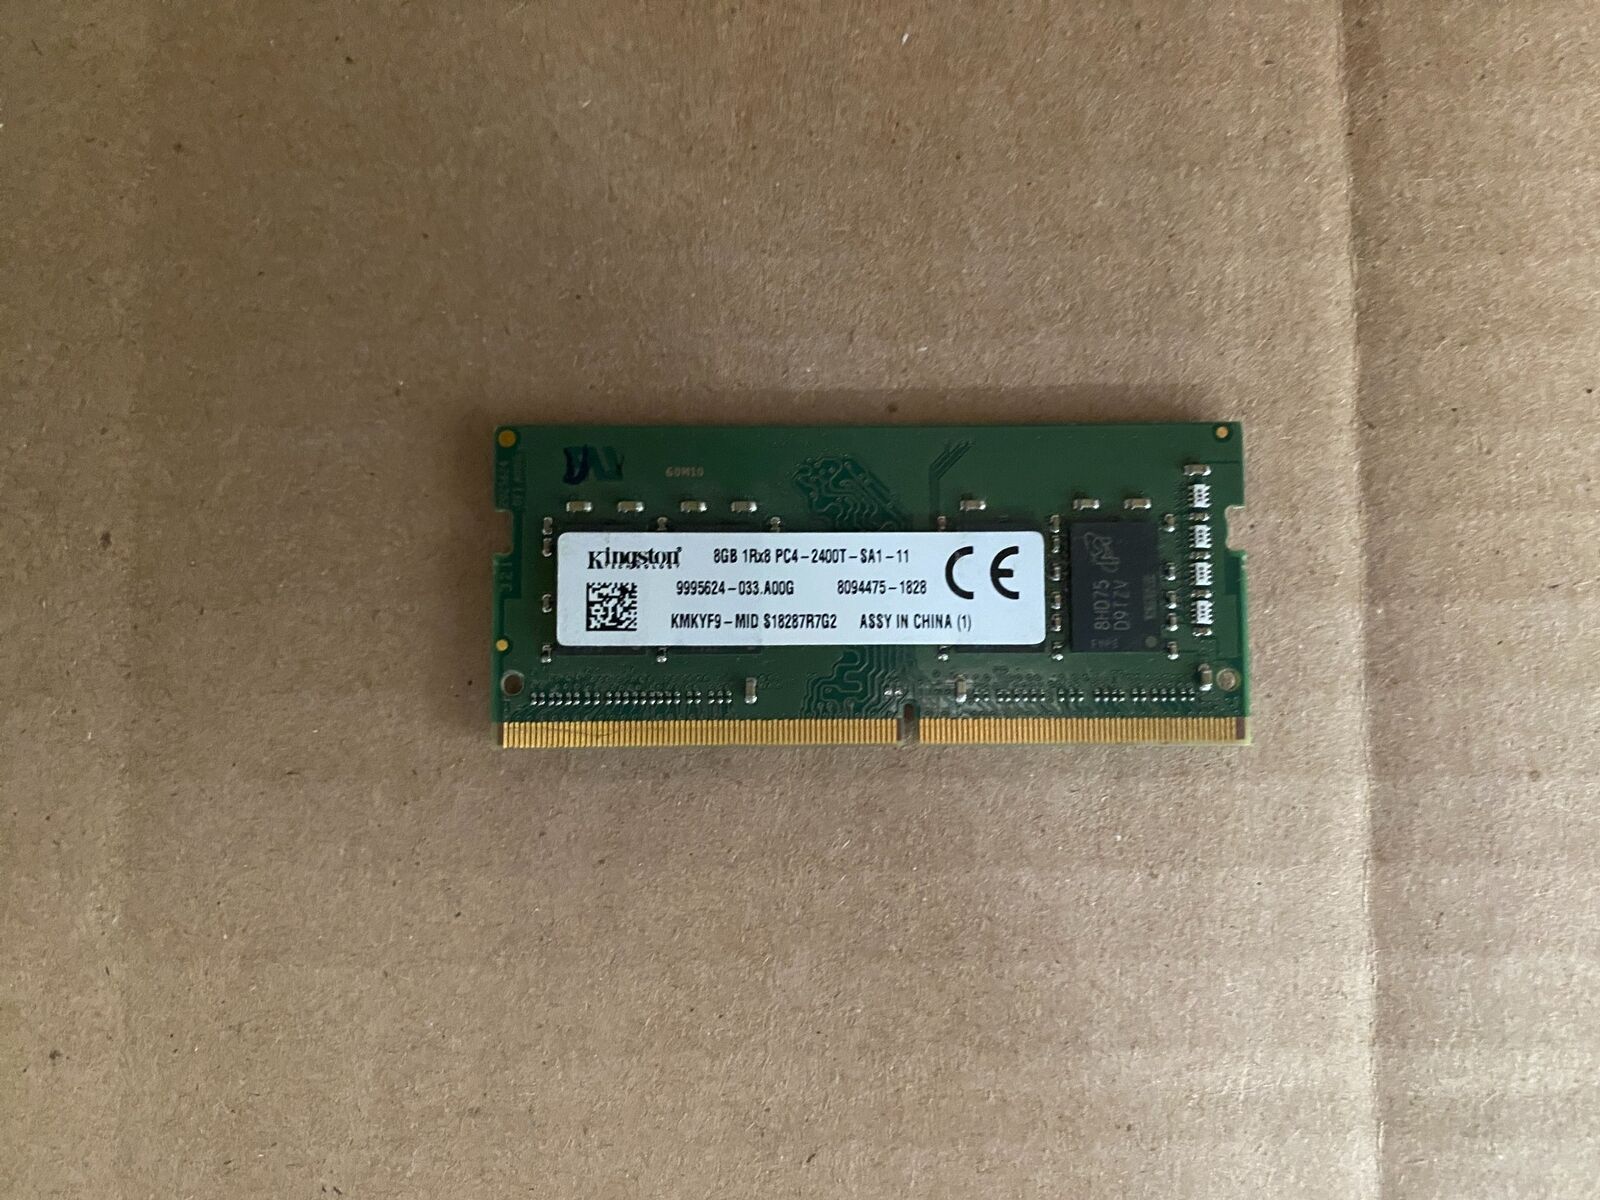 KINGSTON 8GB (1X8GB) 1RX8 PC4-2400T DDR4 SODIMM LAPTOP MEMORY KMKYF9-MID V3-2(4)